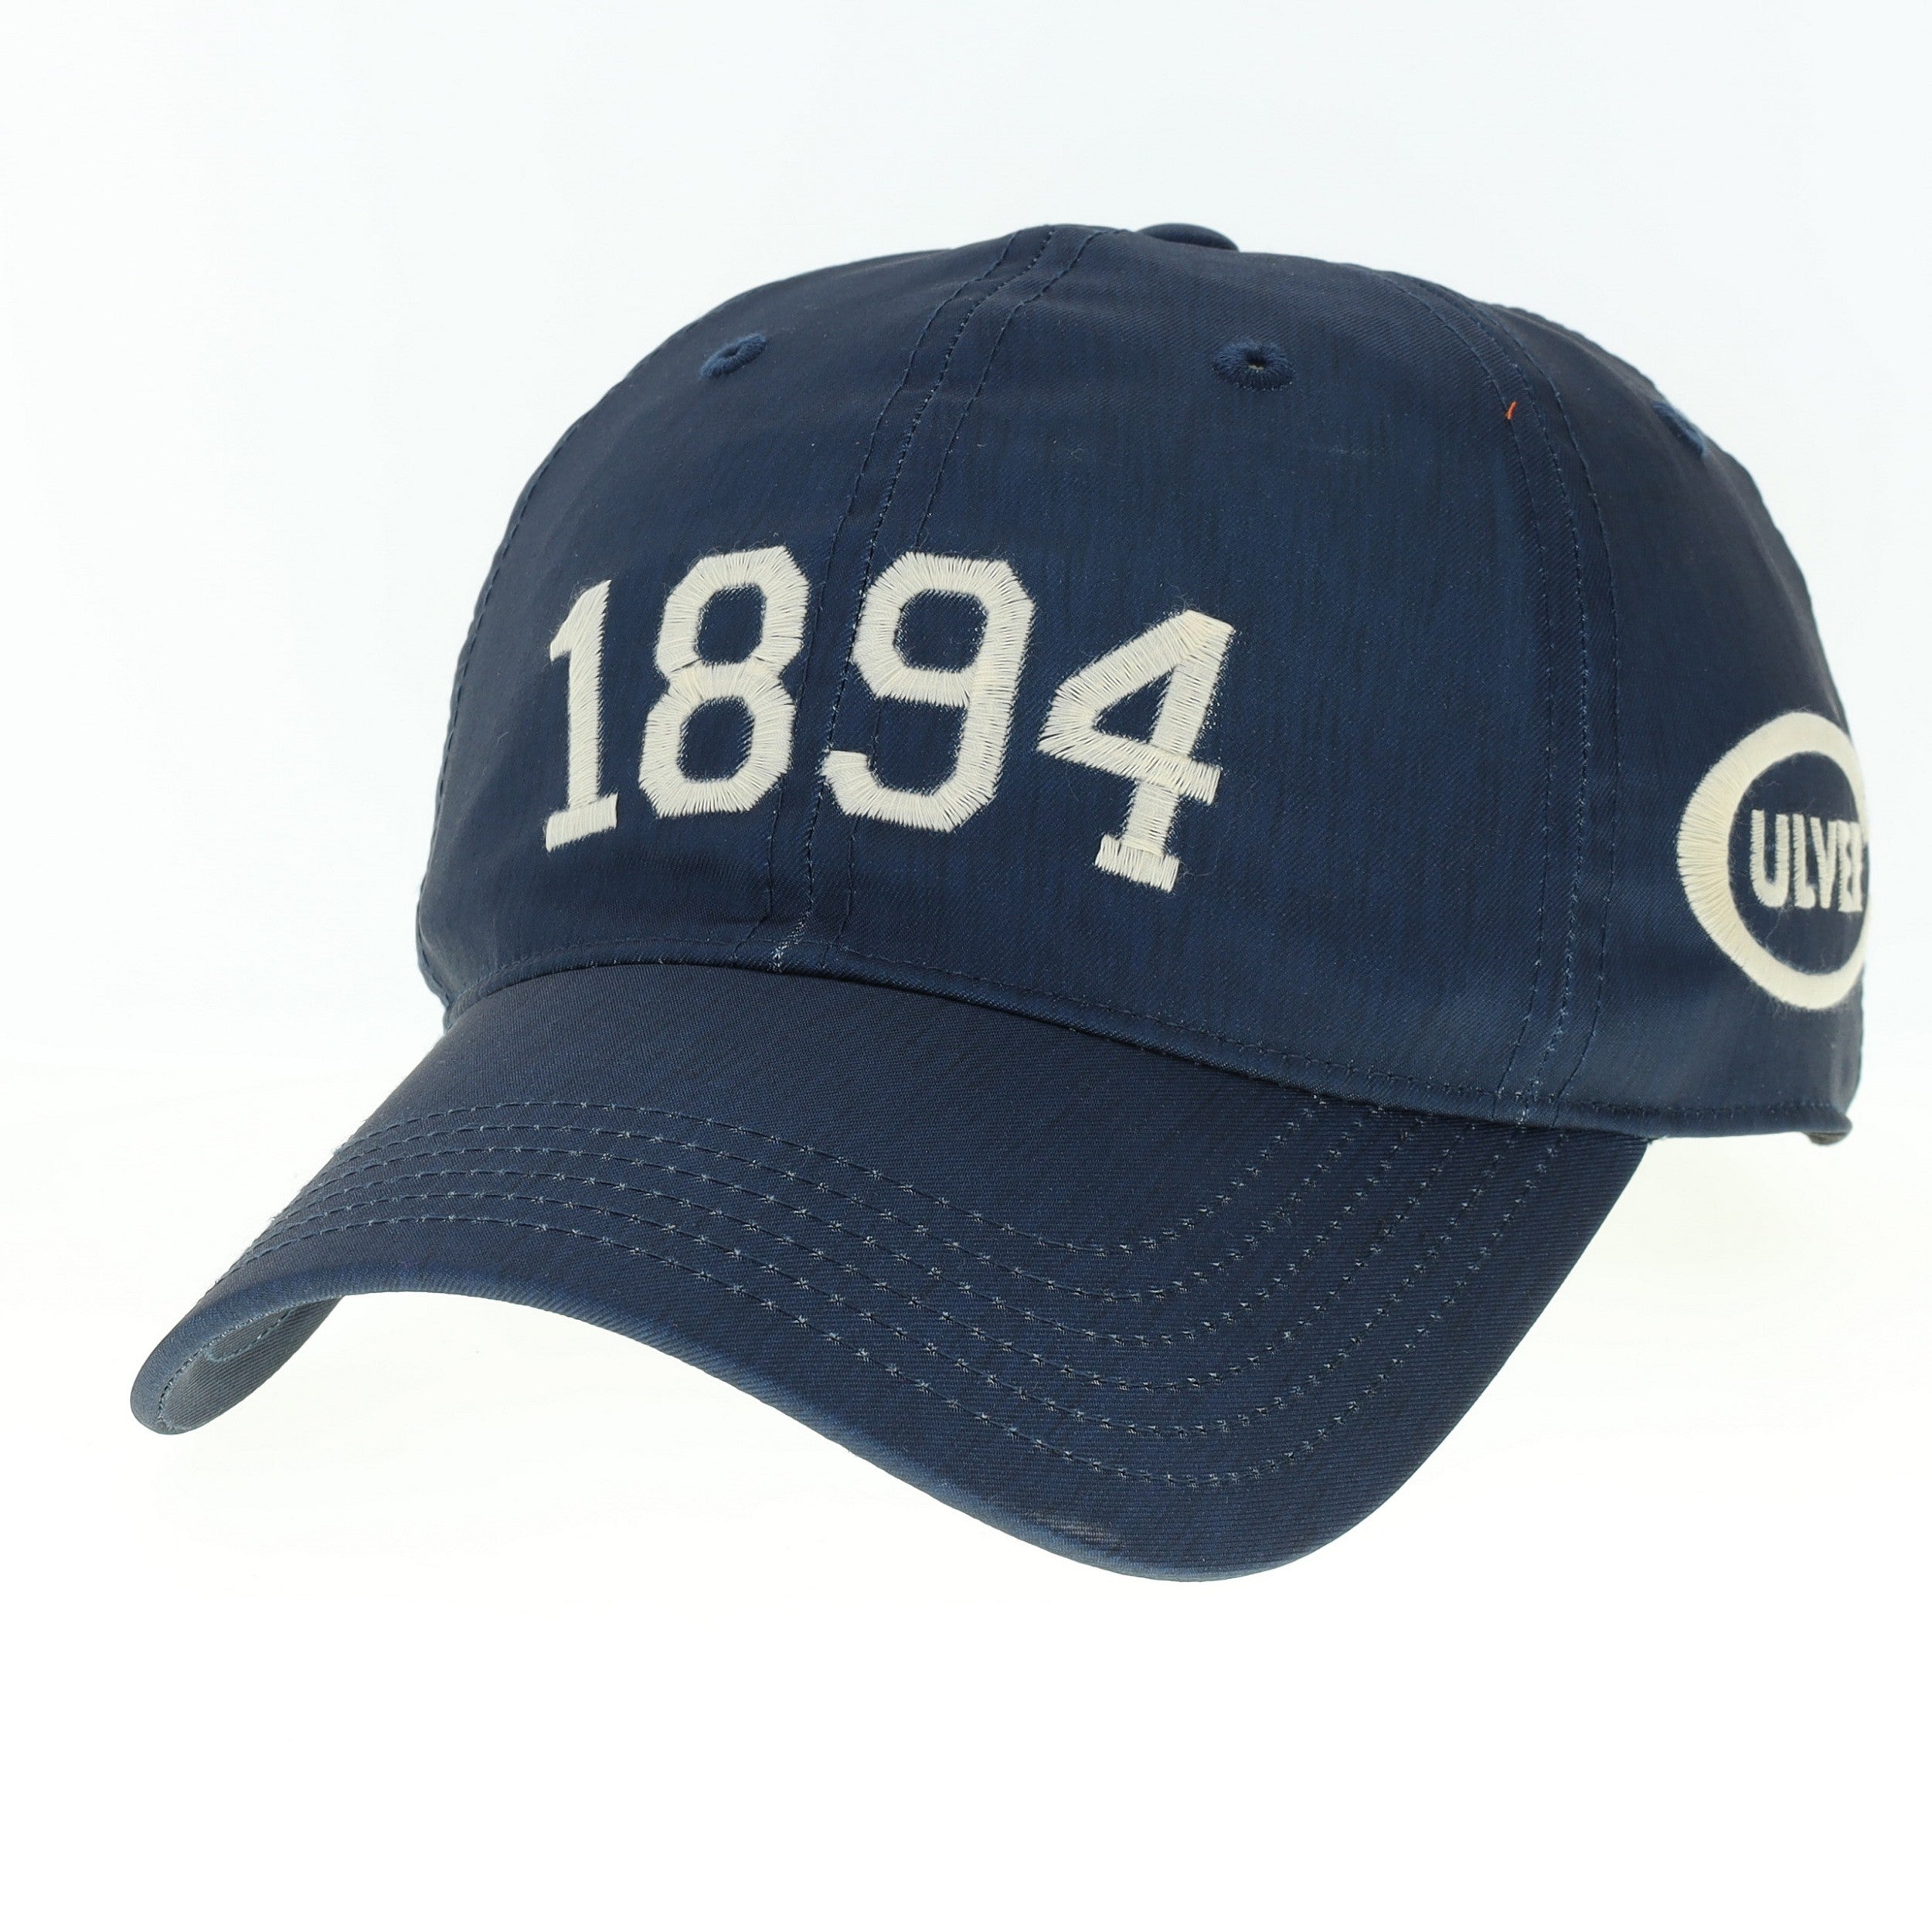 CULVER'S Kids Club Adjustable Baseball Cap - Blue & Gray Scoopie Cool Hat